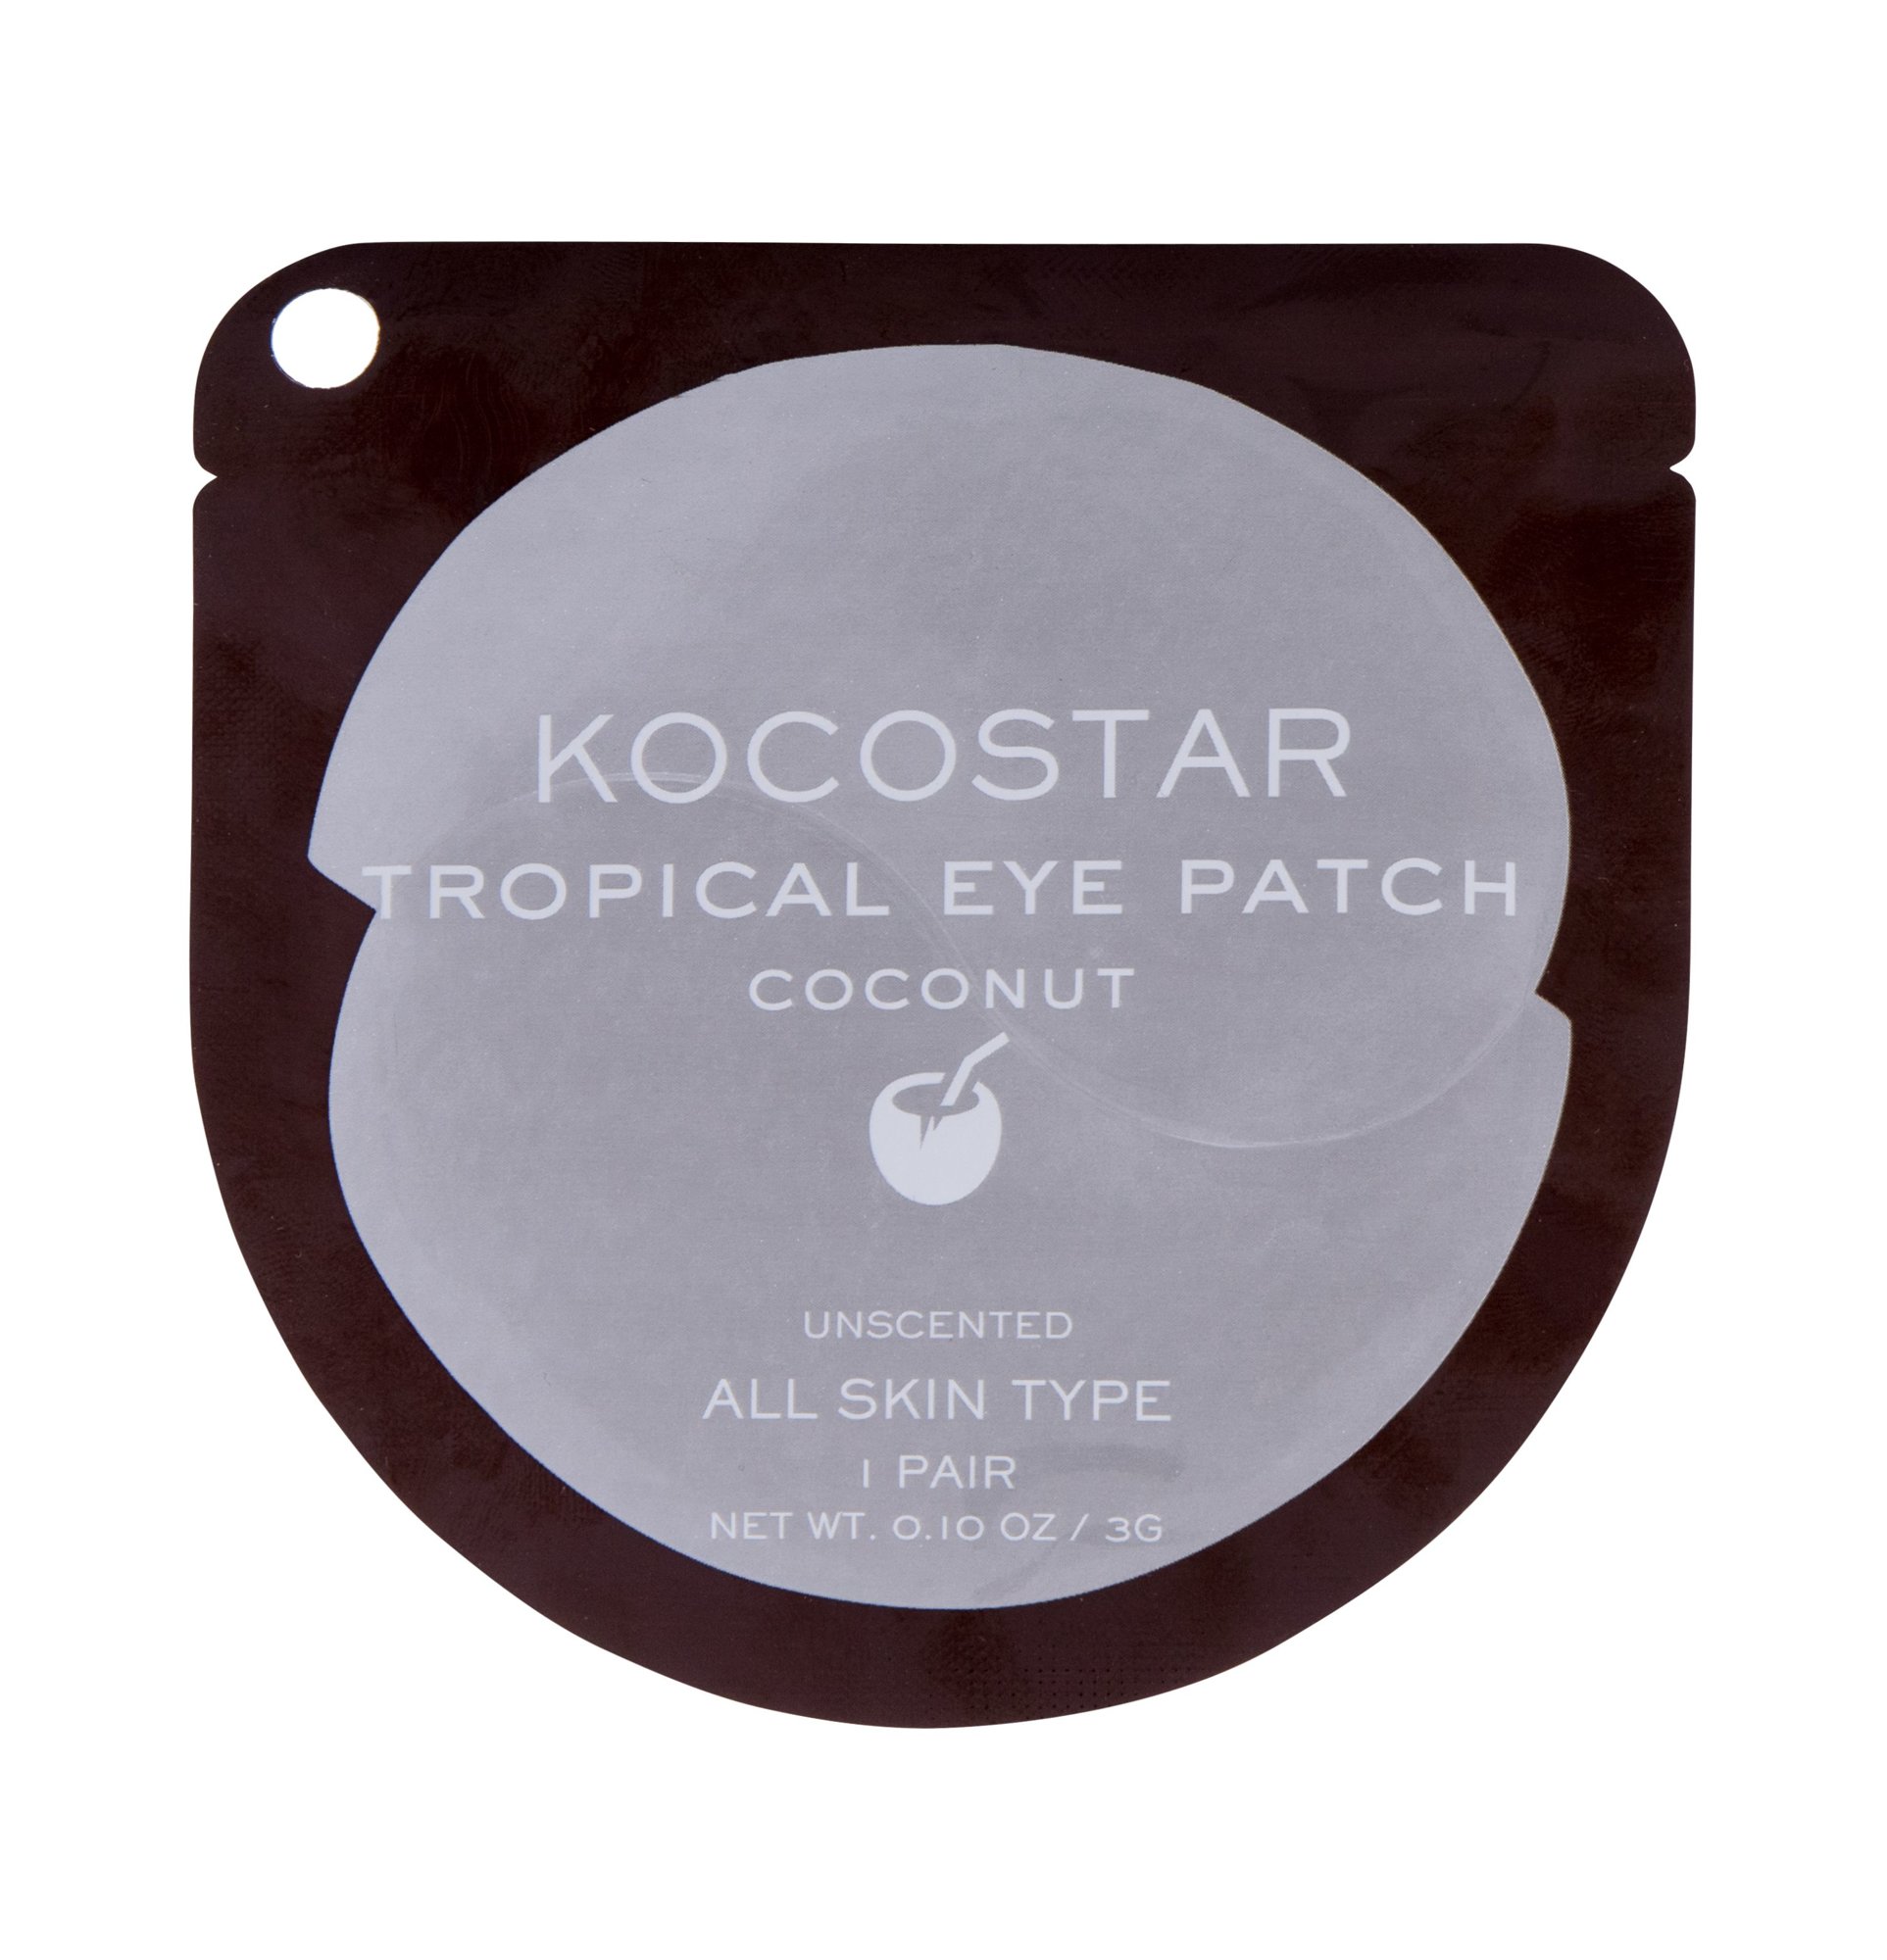 Kocostar Eye Mask Tropical Eye Patch Coconut 3g paakių kaukė